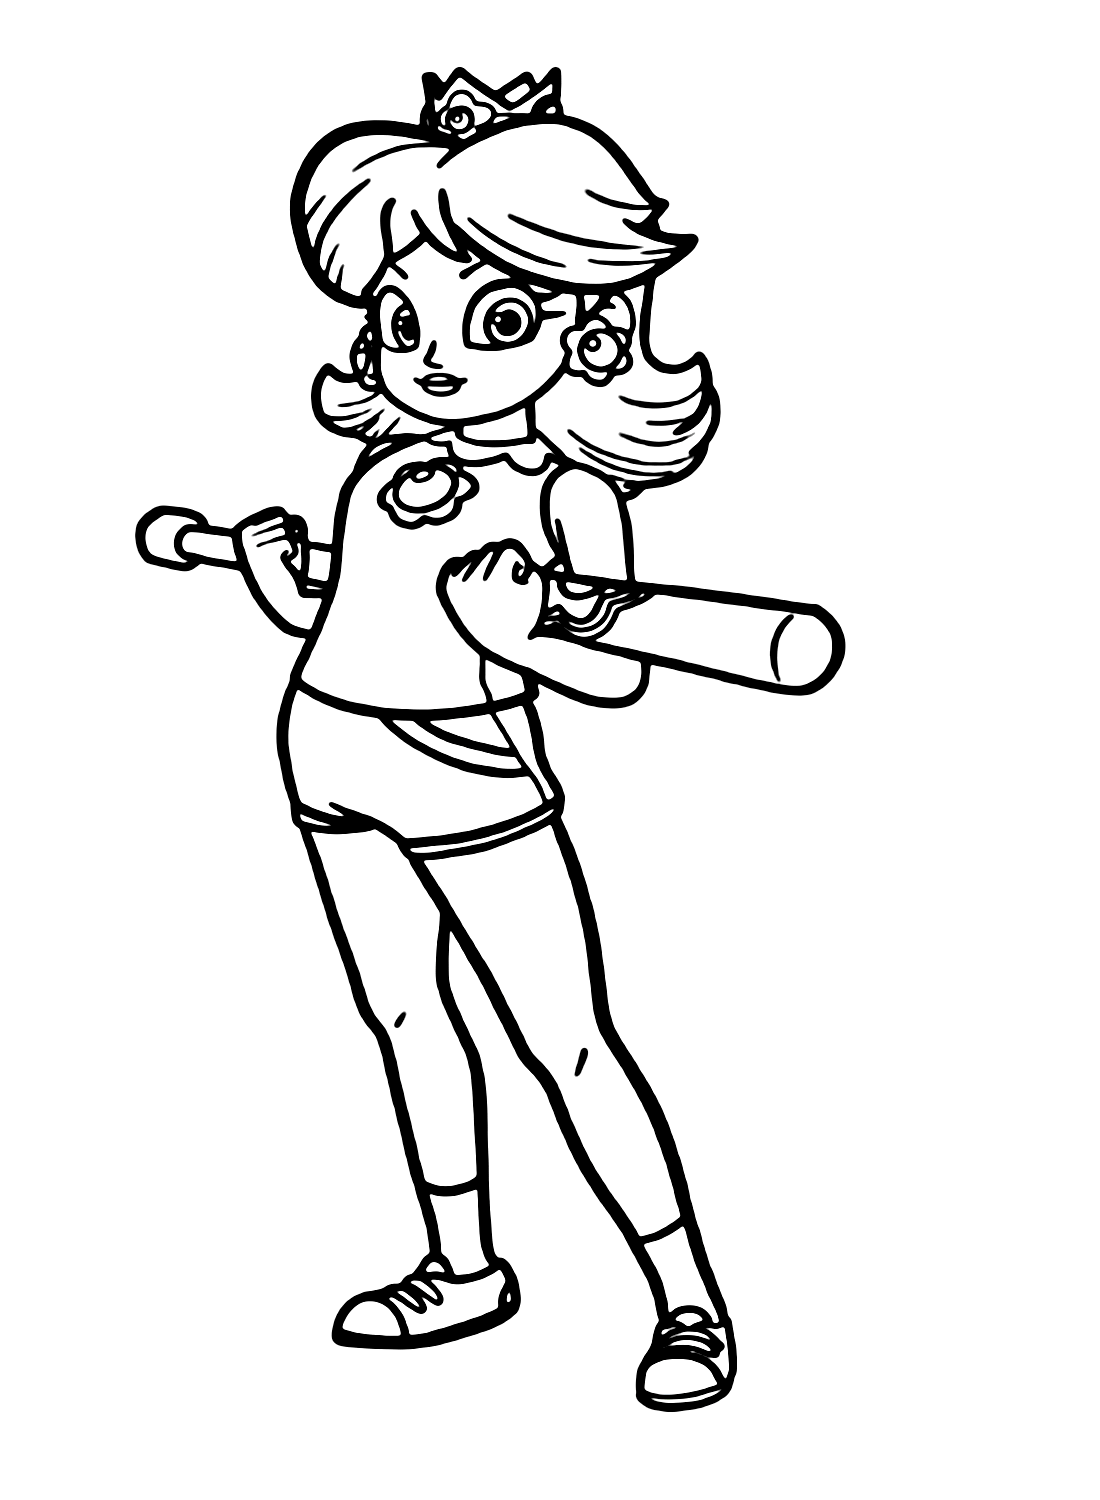 Superestrella del béisbol Princesa Daisy de La princesa Daisy